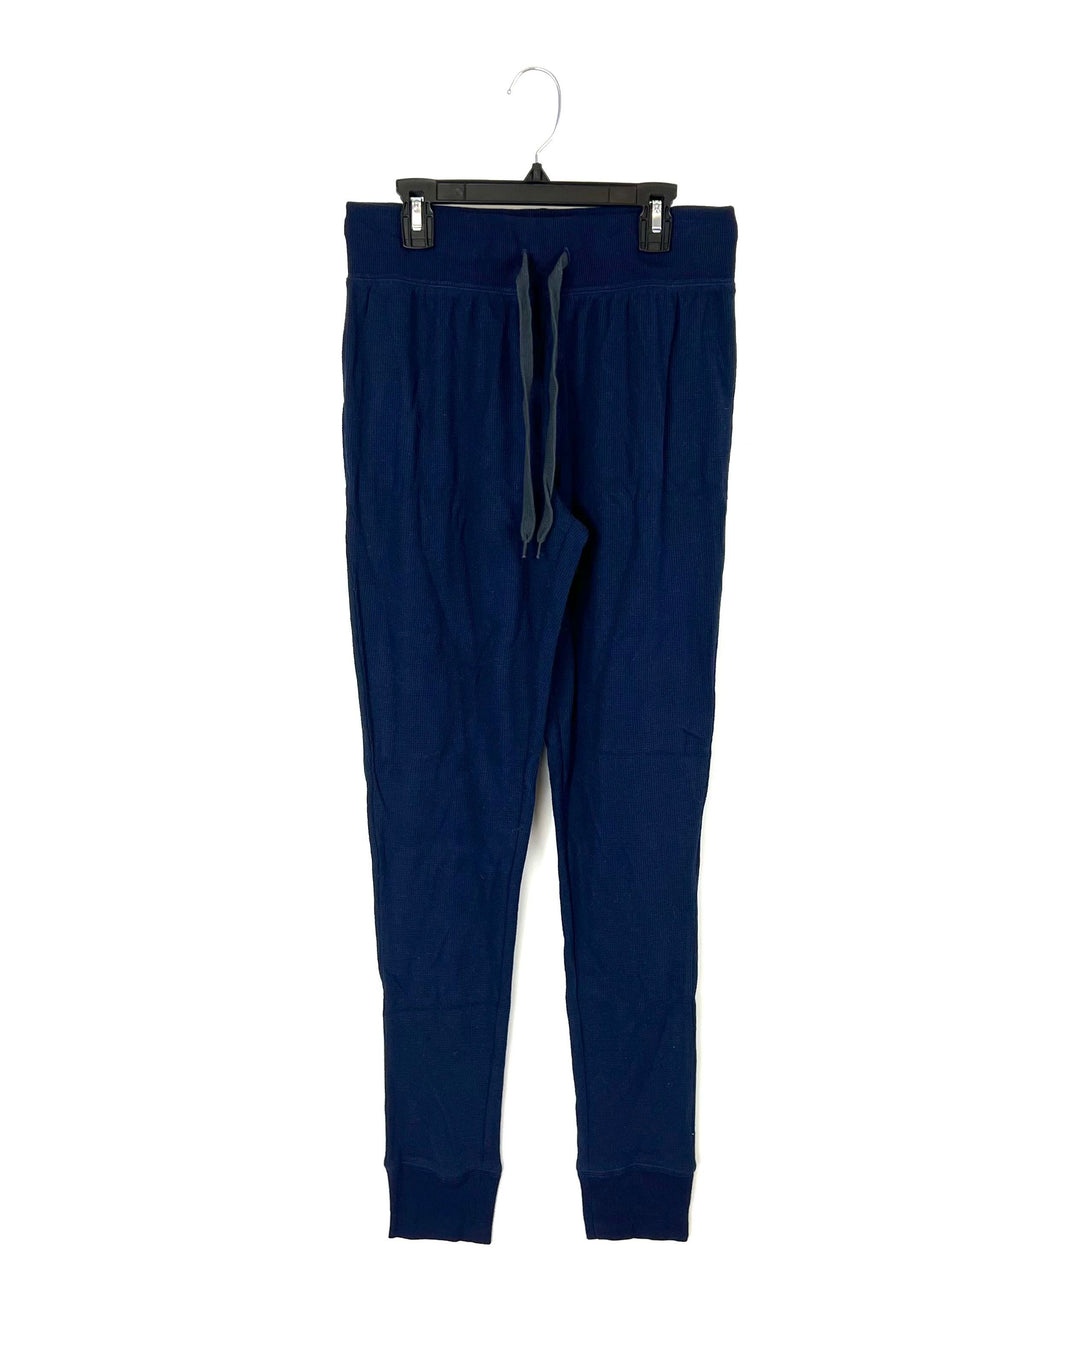 Navy Blue Sweatpants - Small